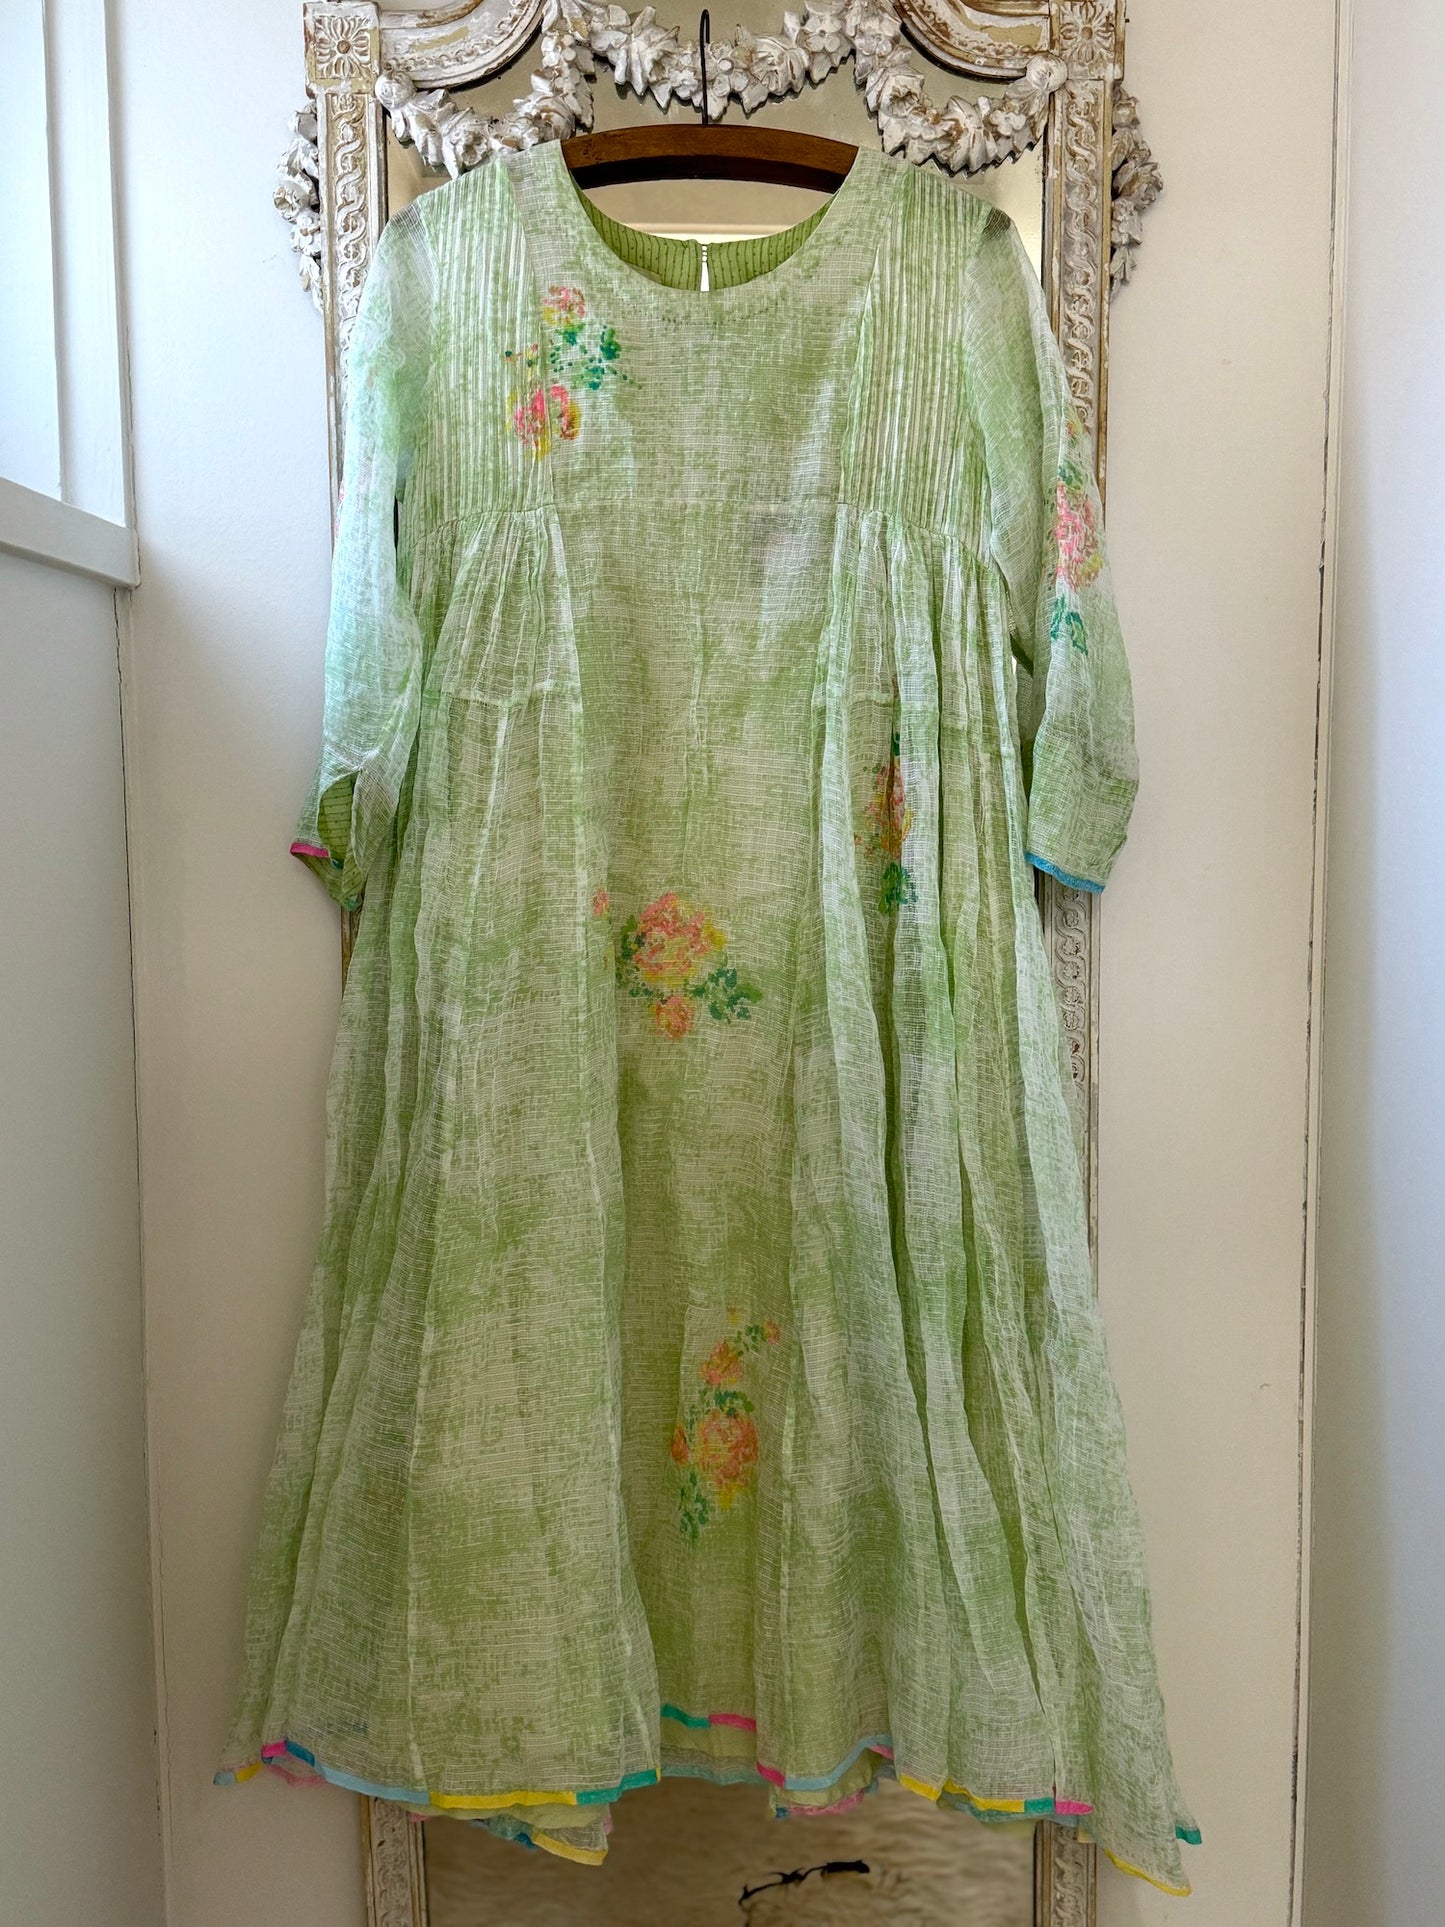 Eka Light Green Floral Dress - Extra Small - LAST ONE